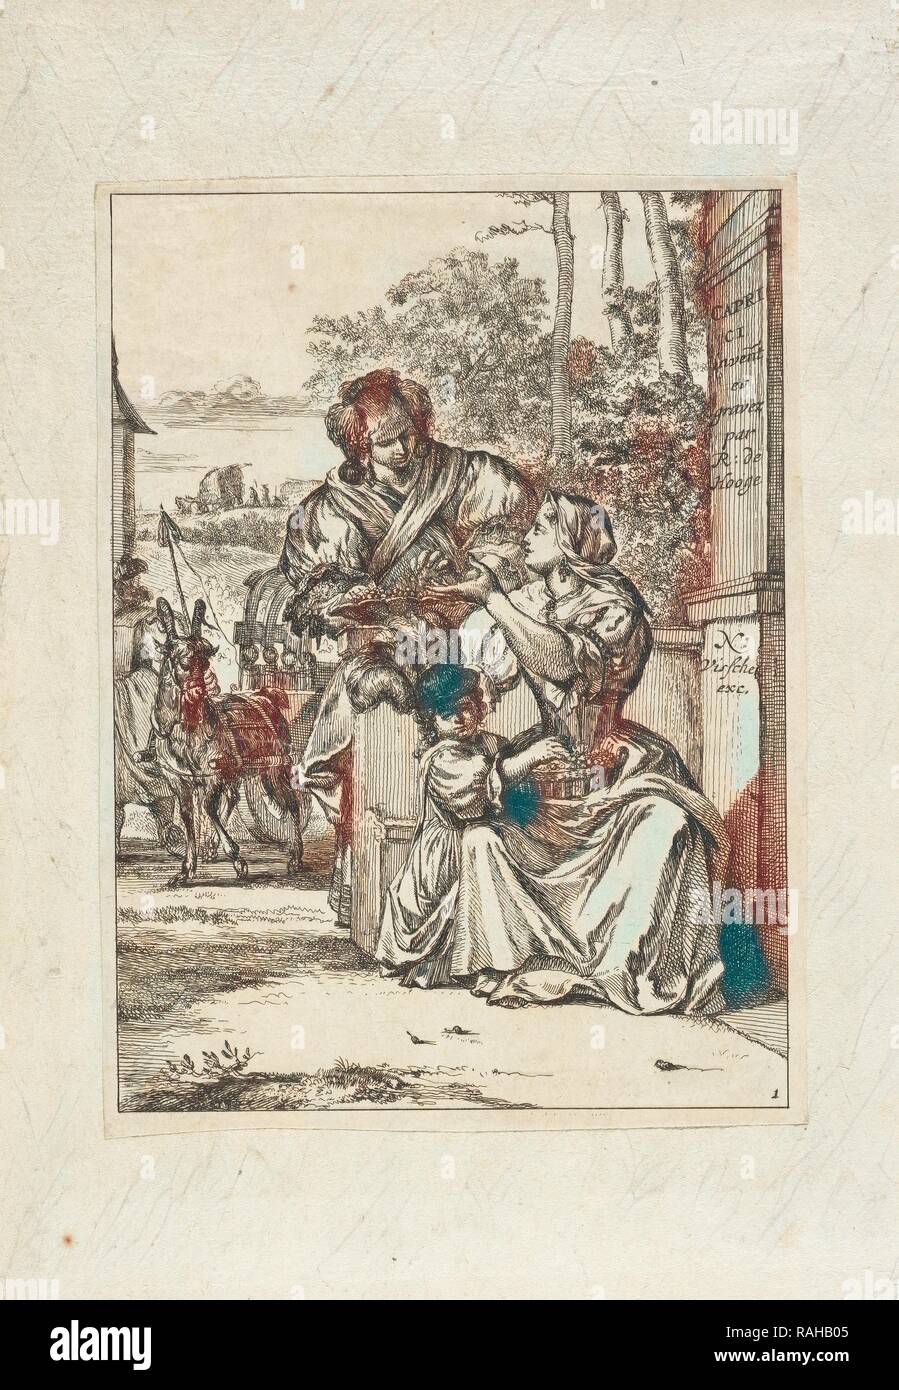 Two women and a little girl, Hooghe, Romeyn de, 1645-1708, Visscher, Nicolae, 1618-1679, Engraving, 1674, Engraved reimagined Stock Photo